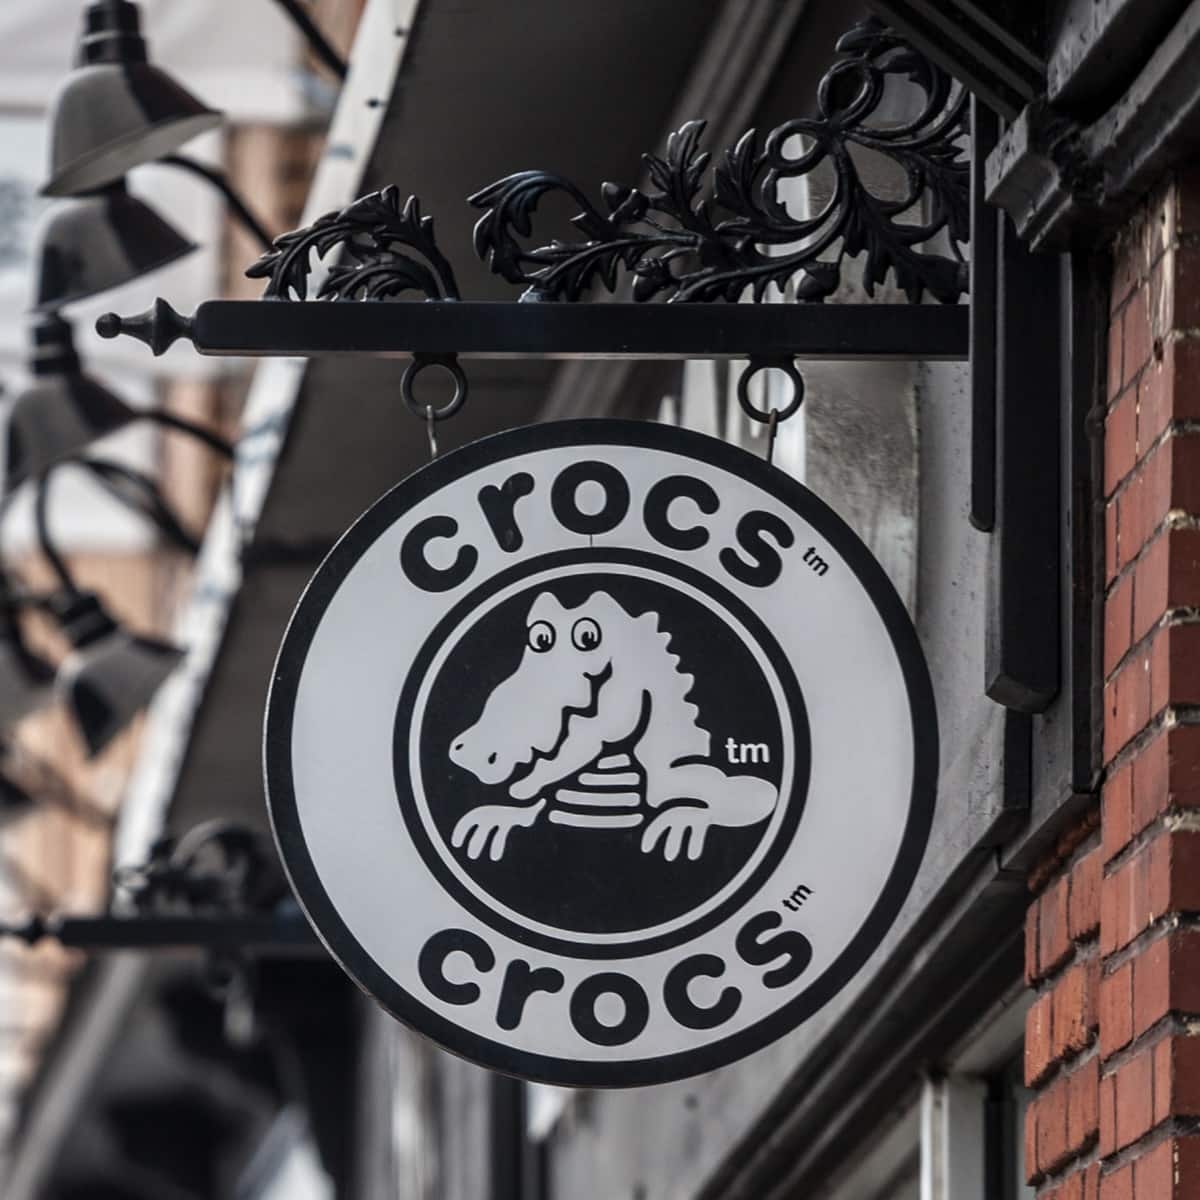 Called Duke, the Crocs crocodile logo was discontinued in 2019